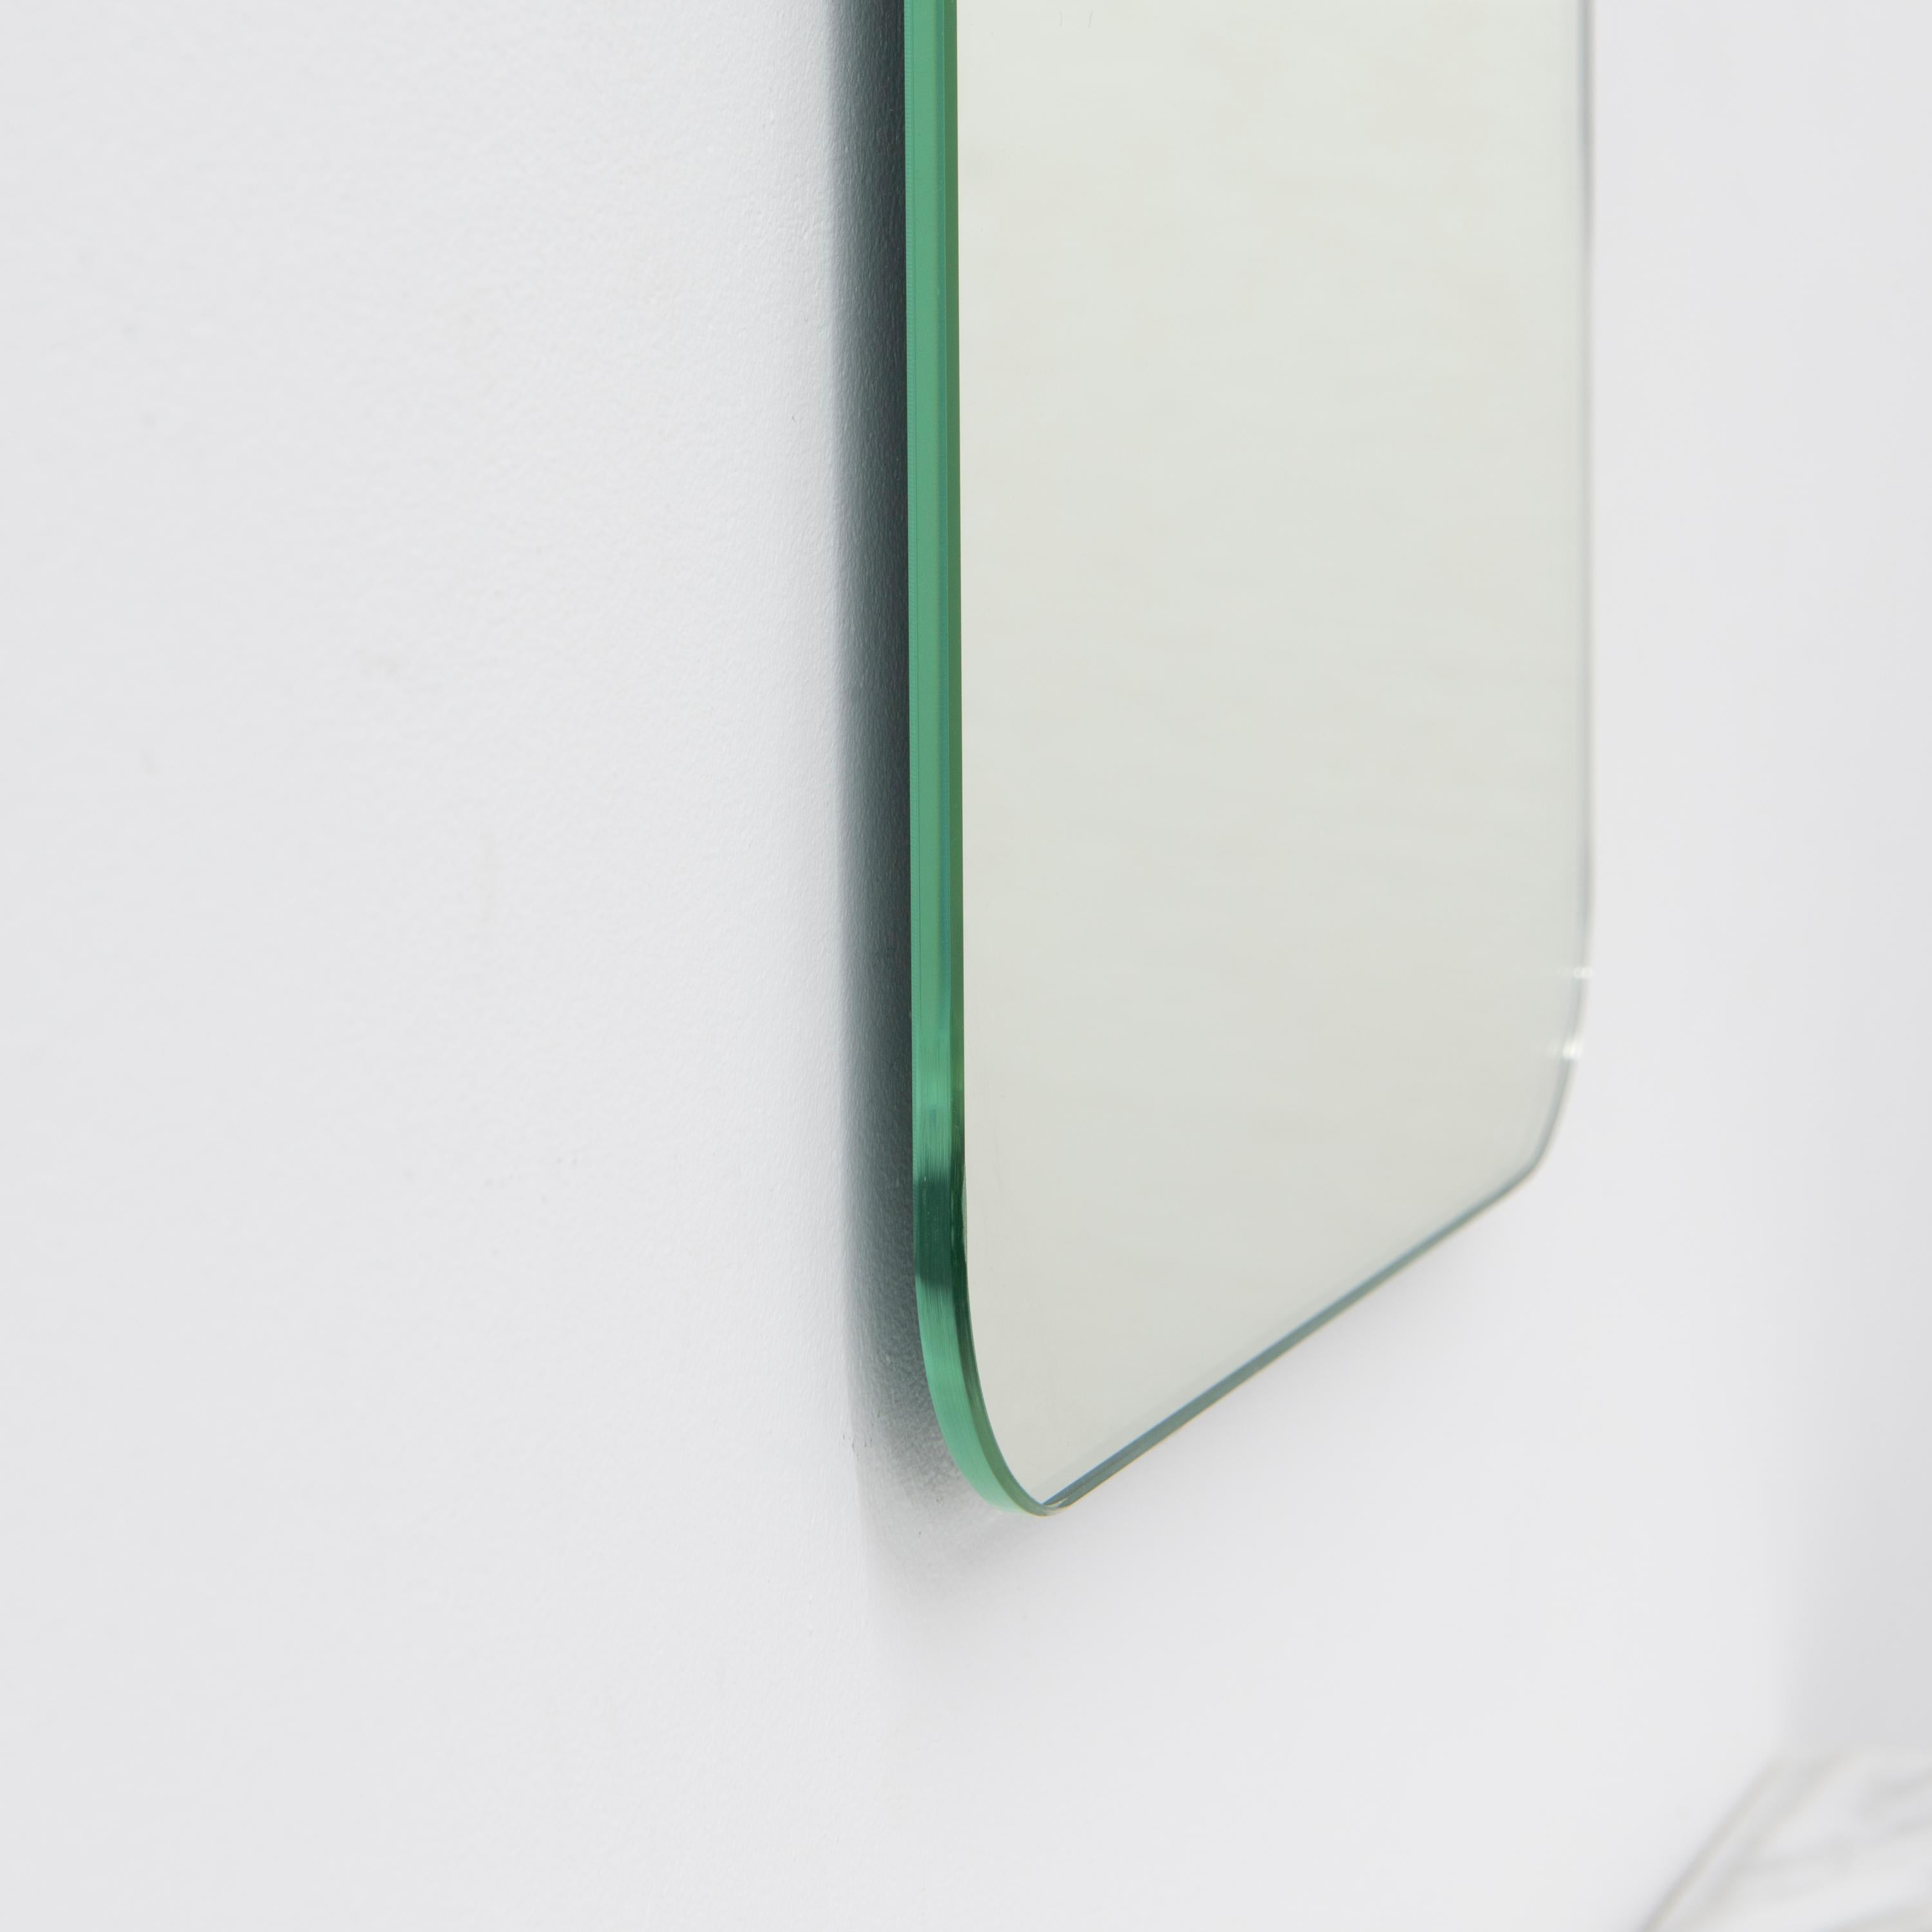 Quadris Black Tinted Rectangular Frameless Minimalist Mirror, Medium In New Condition For Sale In London, GB